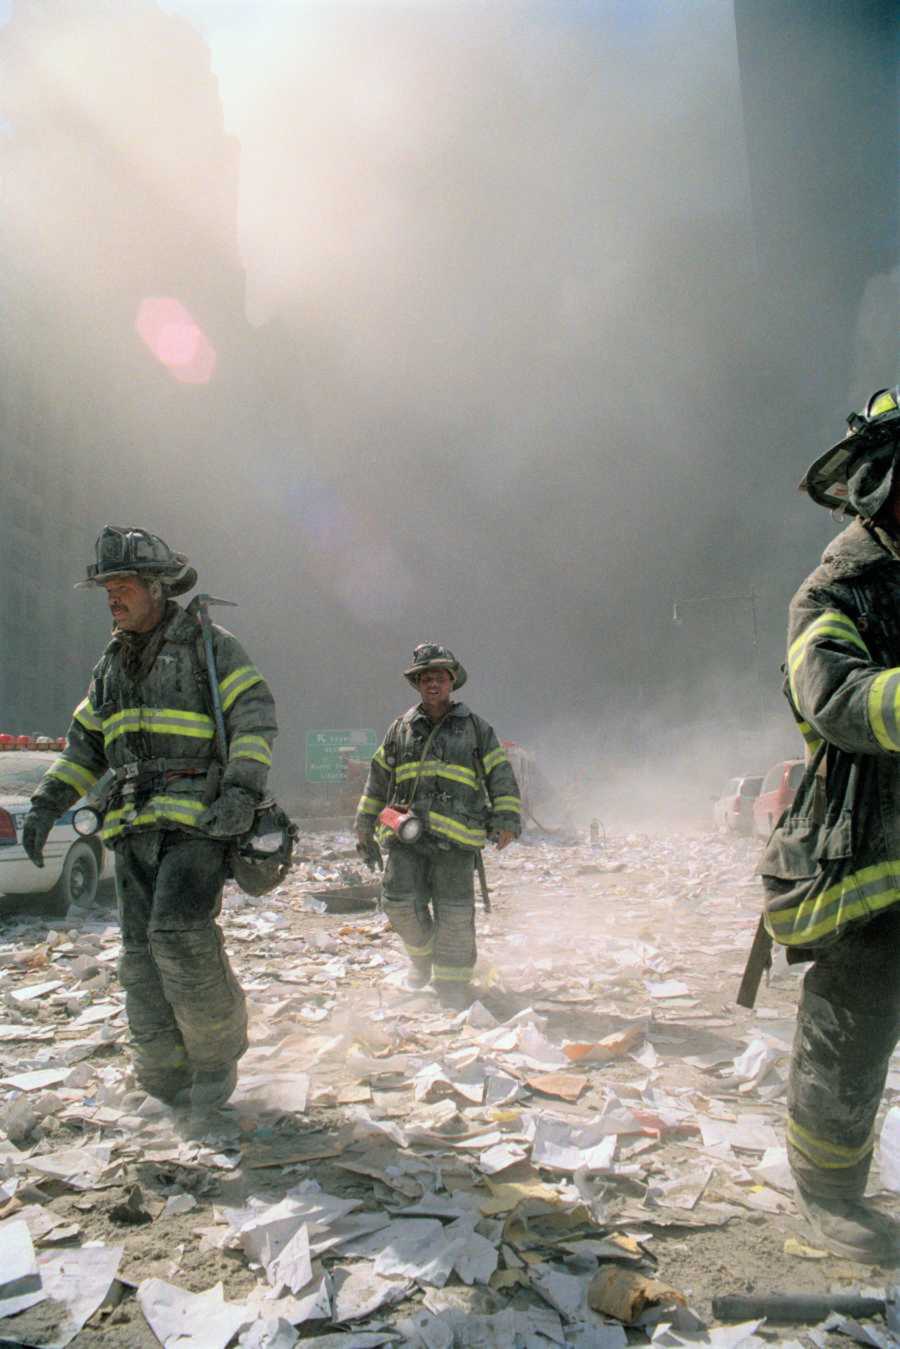 Three firemen walk amongst the smoke that the crash created